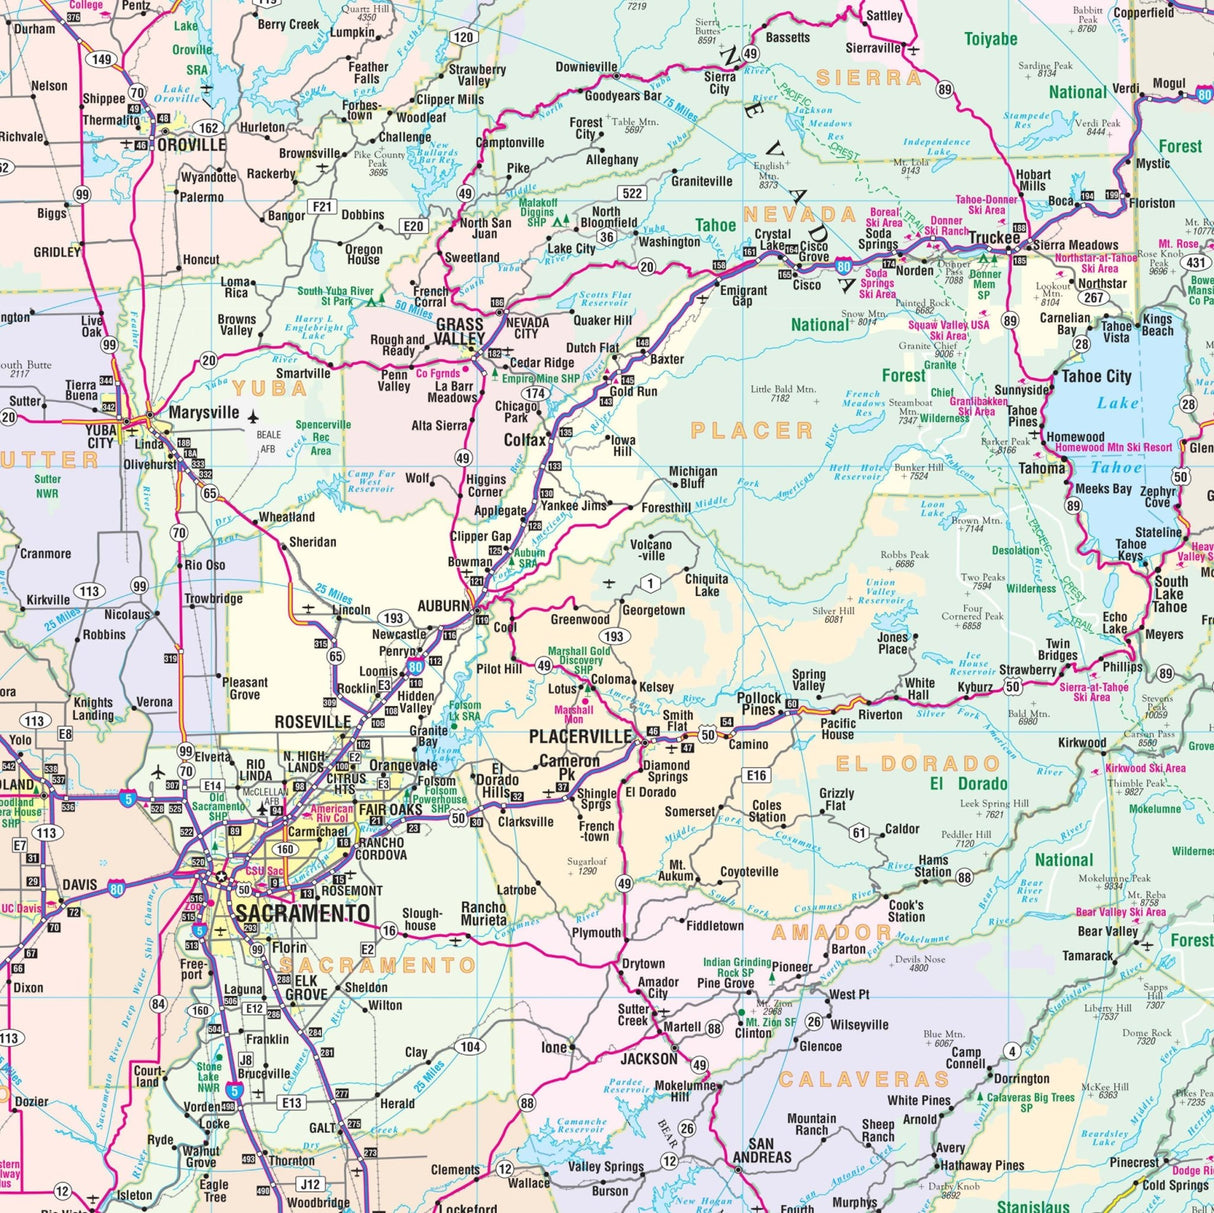 Northern California Regional Wall Map - KA-R-CA-NORTHERN-PAPER - Ultimate Globes